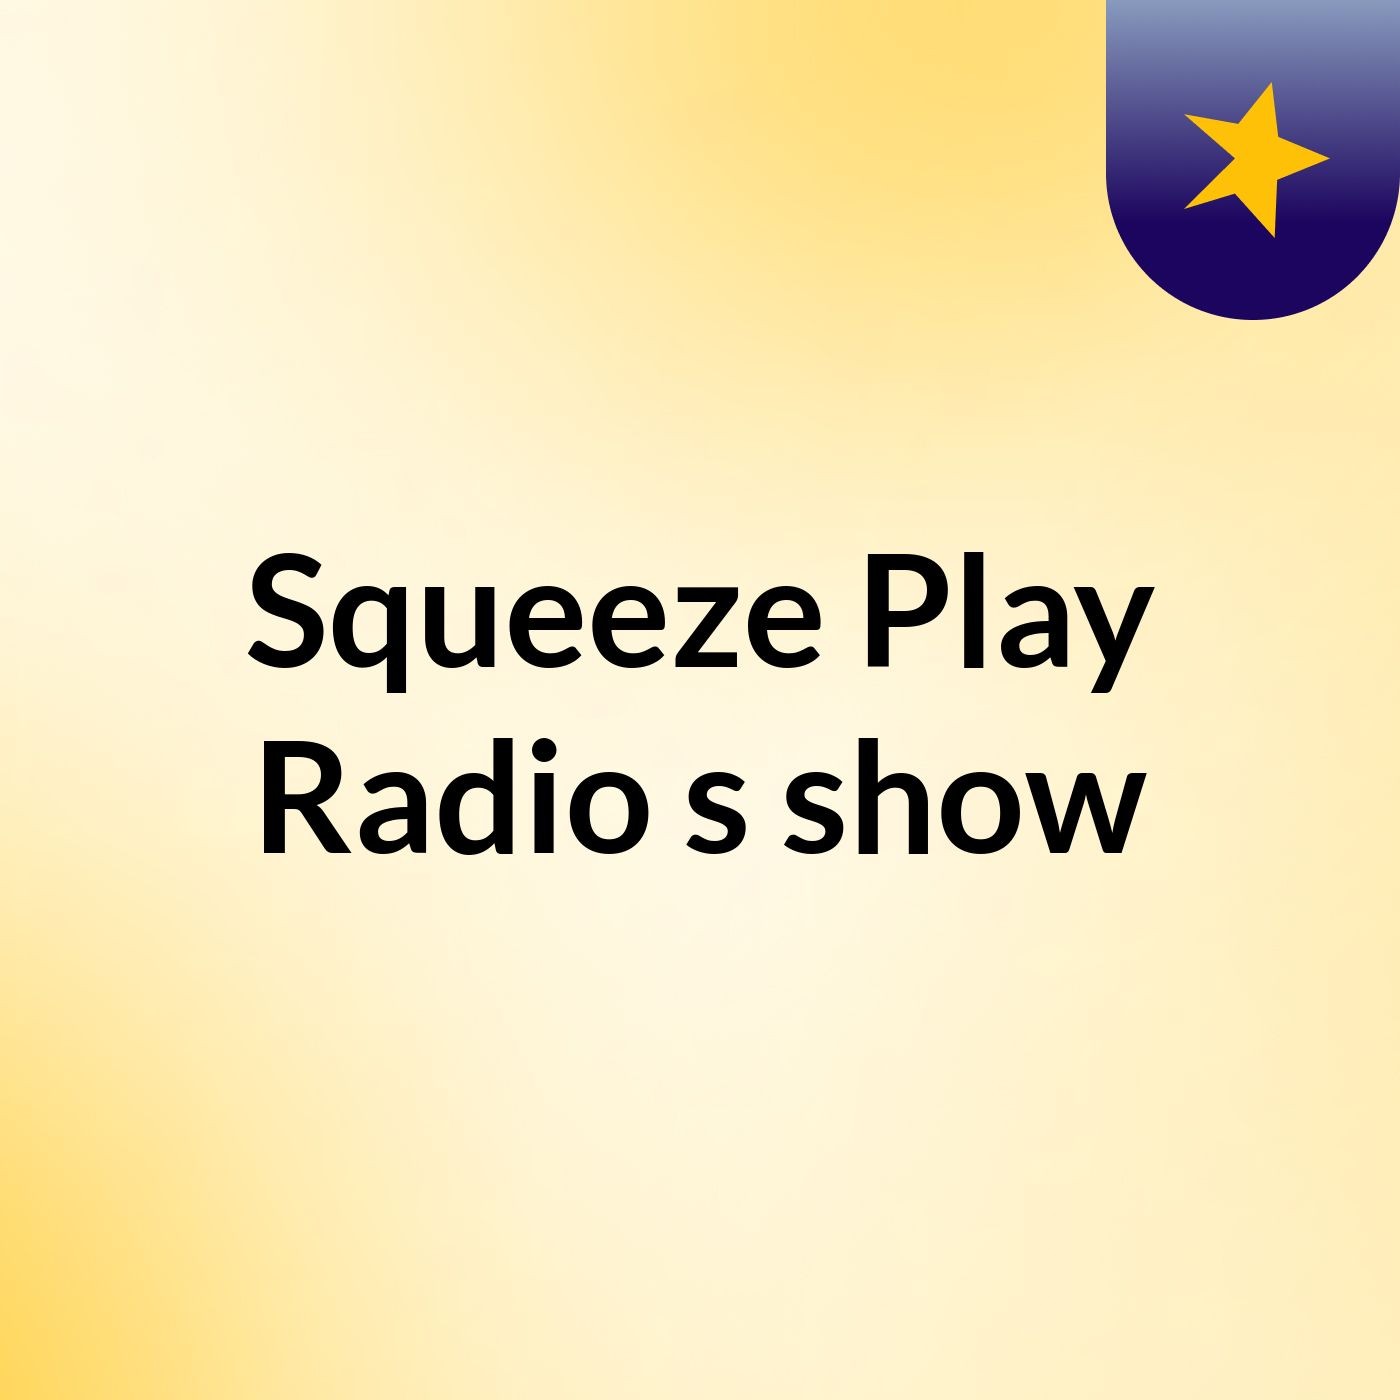 Squeeze Play Radio's show